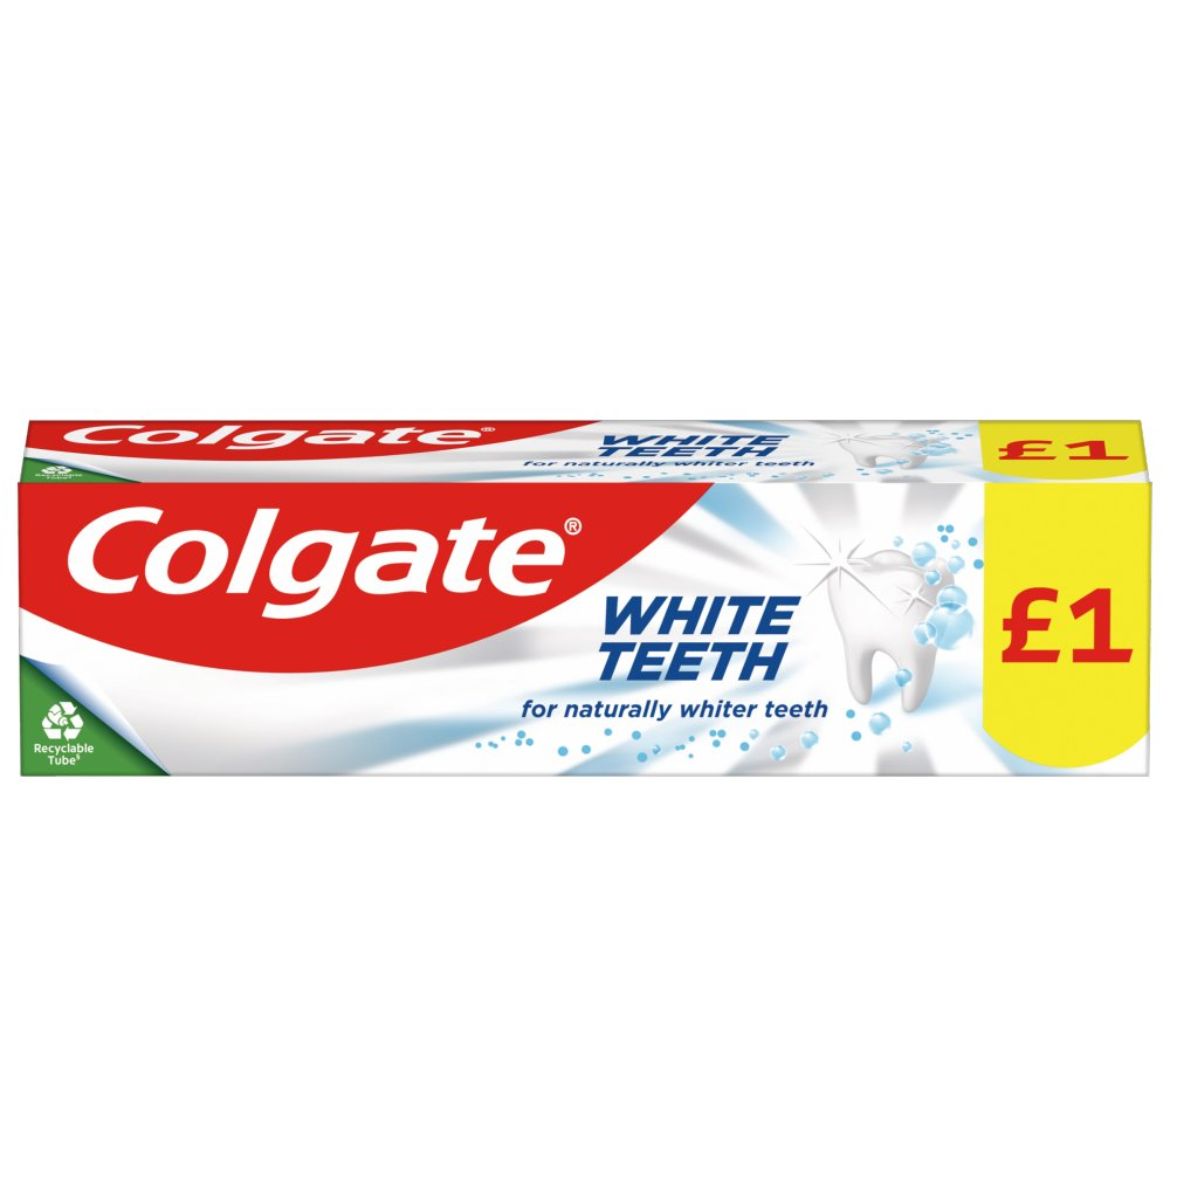 A tube of Colgate - White Teeth Toothpaste - 75ml on a white background.